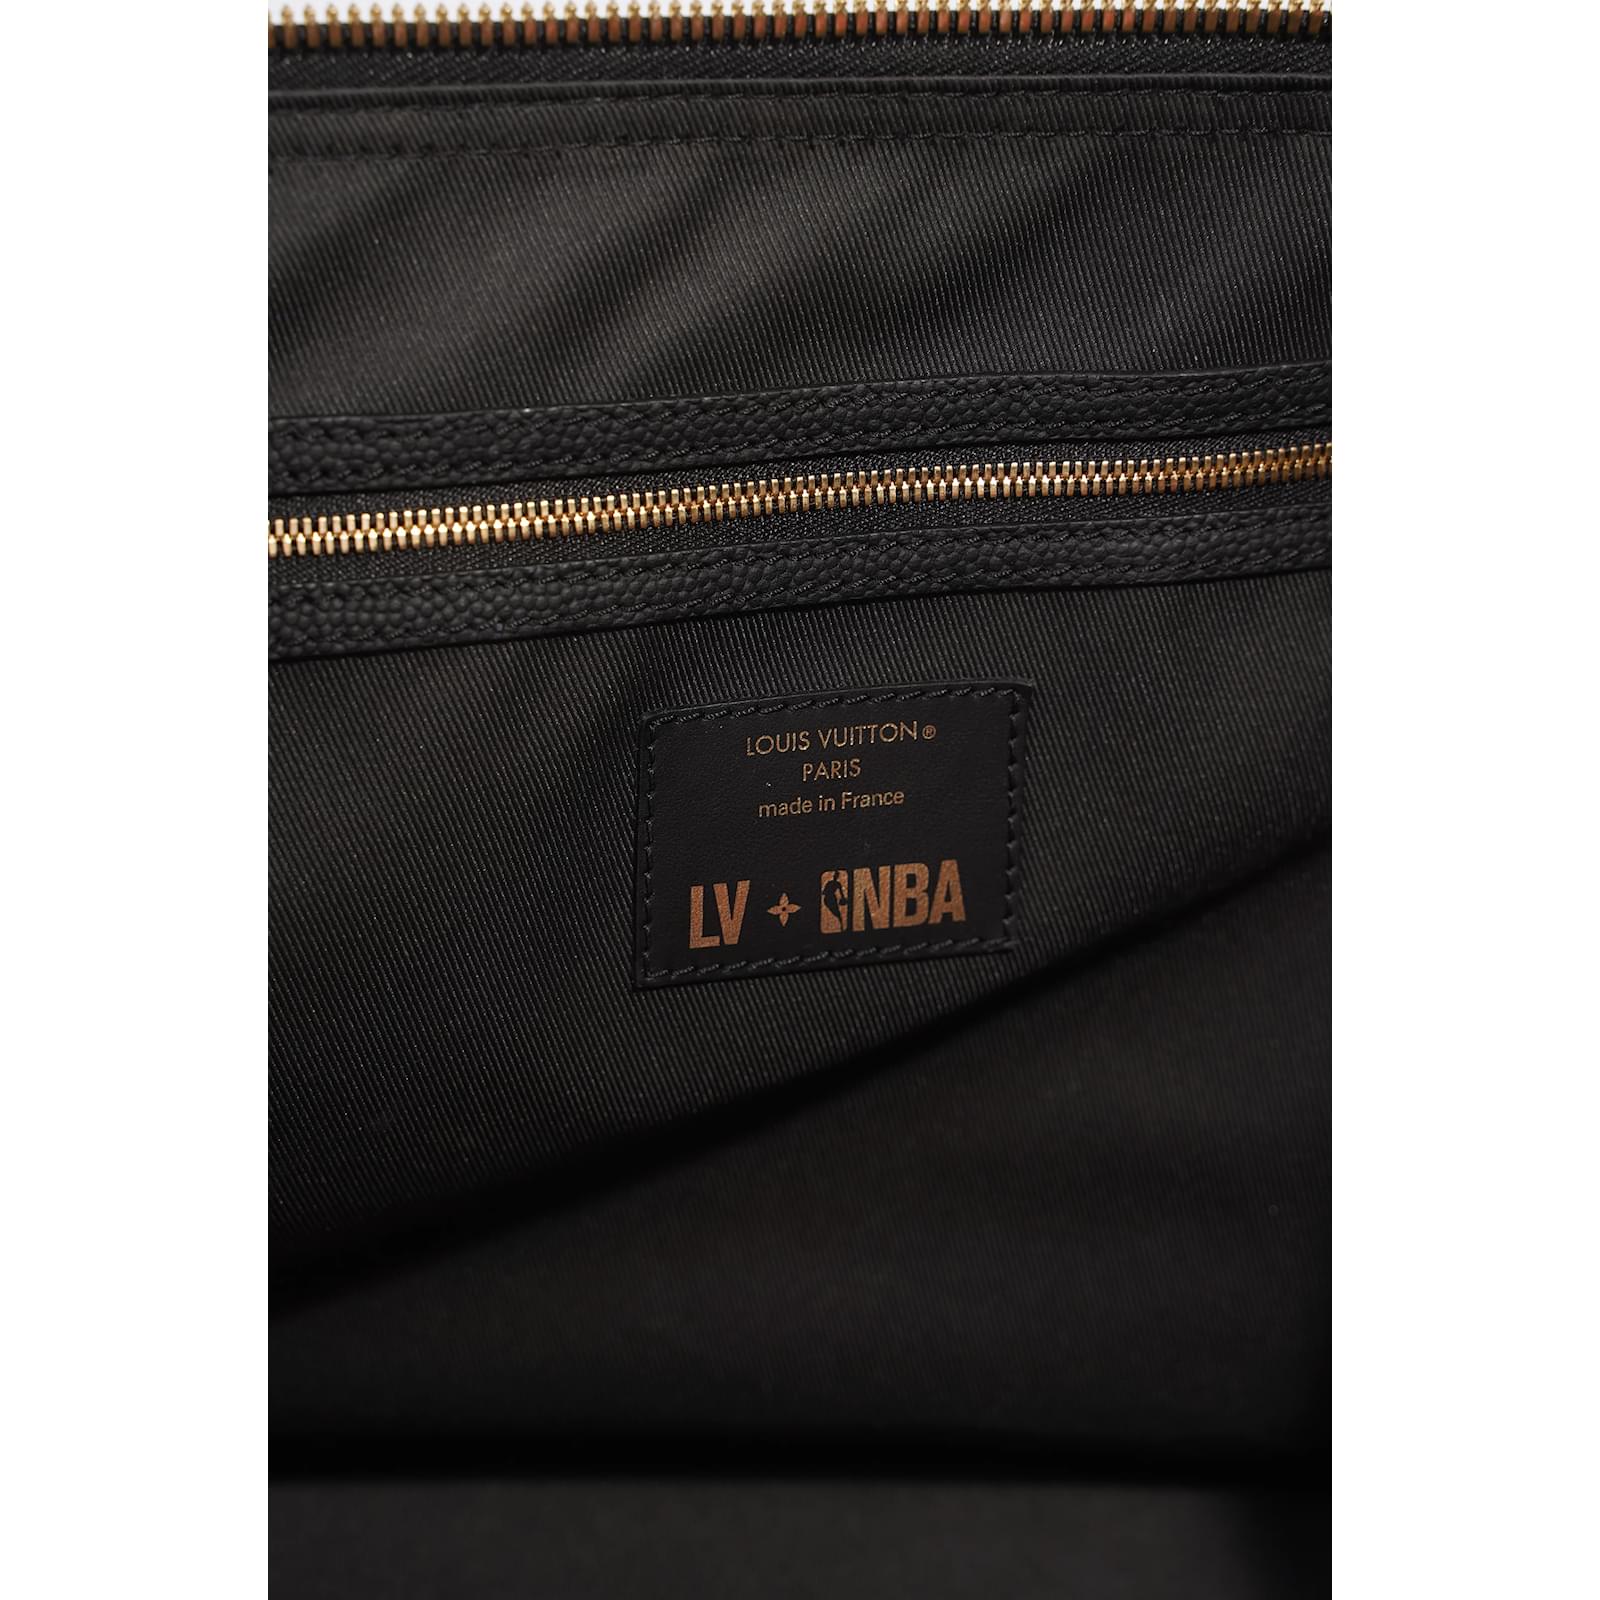 Travel Bag Louis Vuitton Louis Vuitton NBA S1 Black Keepall Bag Black Leather 50